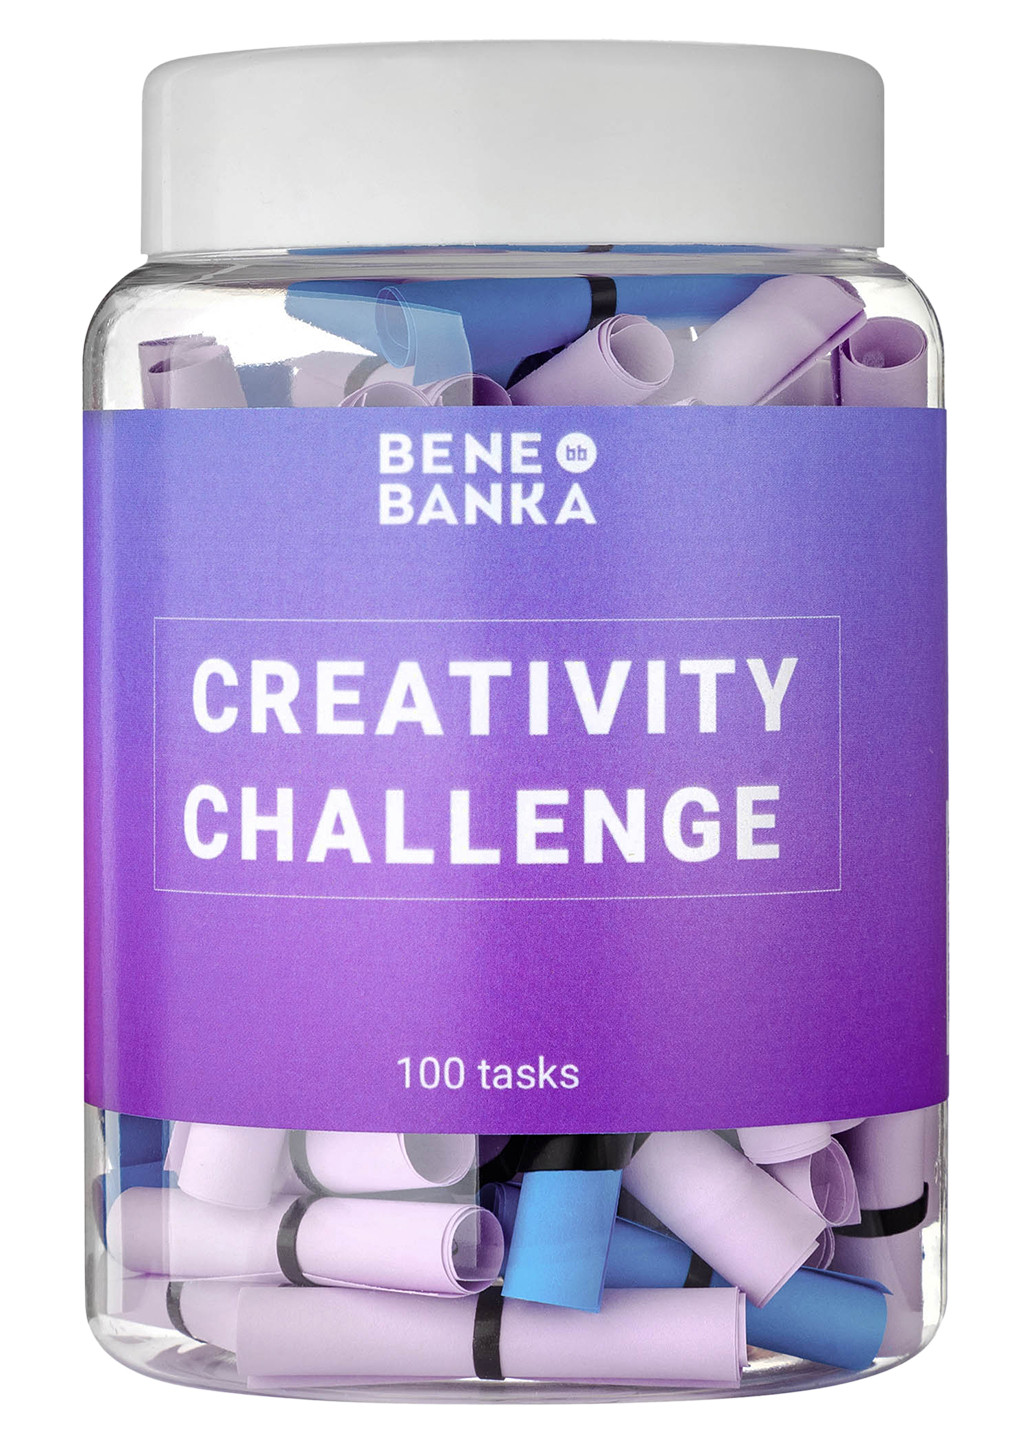 Баночка с заданиями "Creativity Challenge" английский язык Bene Banka (200653607)